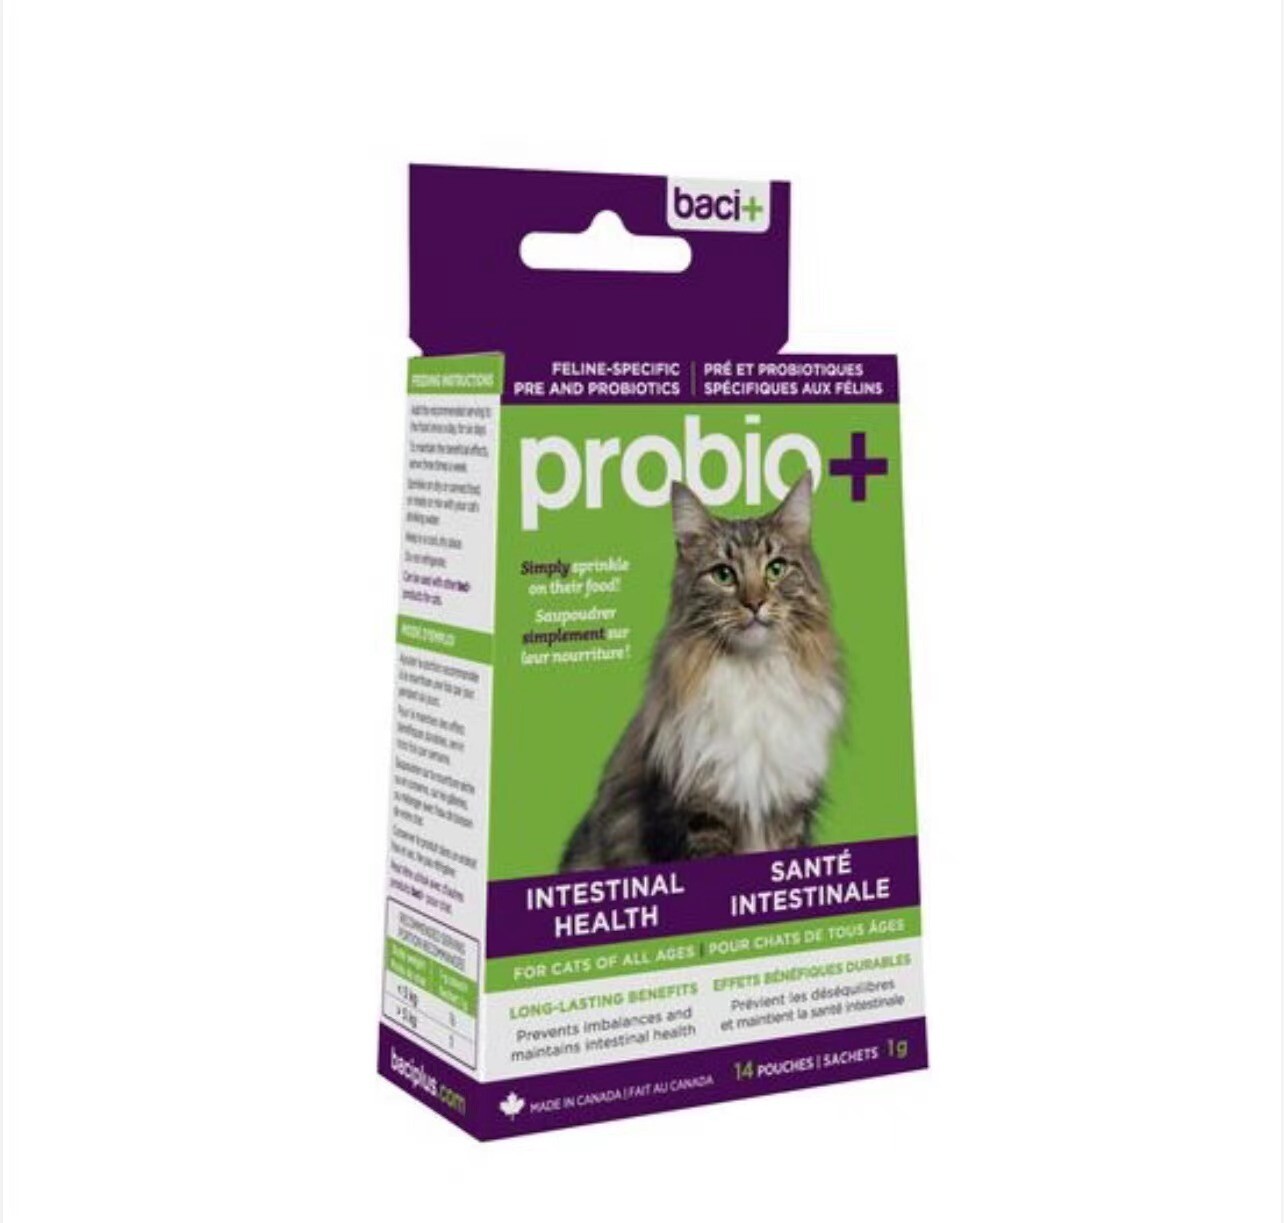 Baci+probio+ PRE AND PROBIOTICS  For CATS - 猫咪肠道健康益生菌